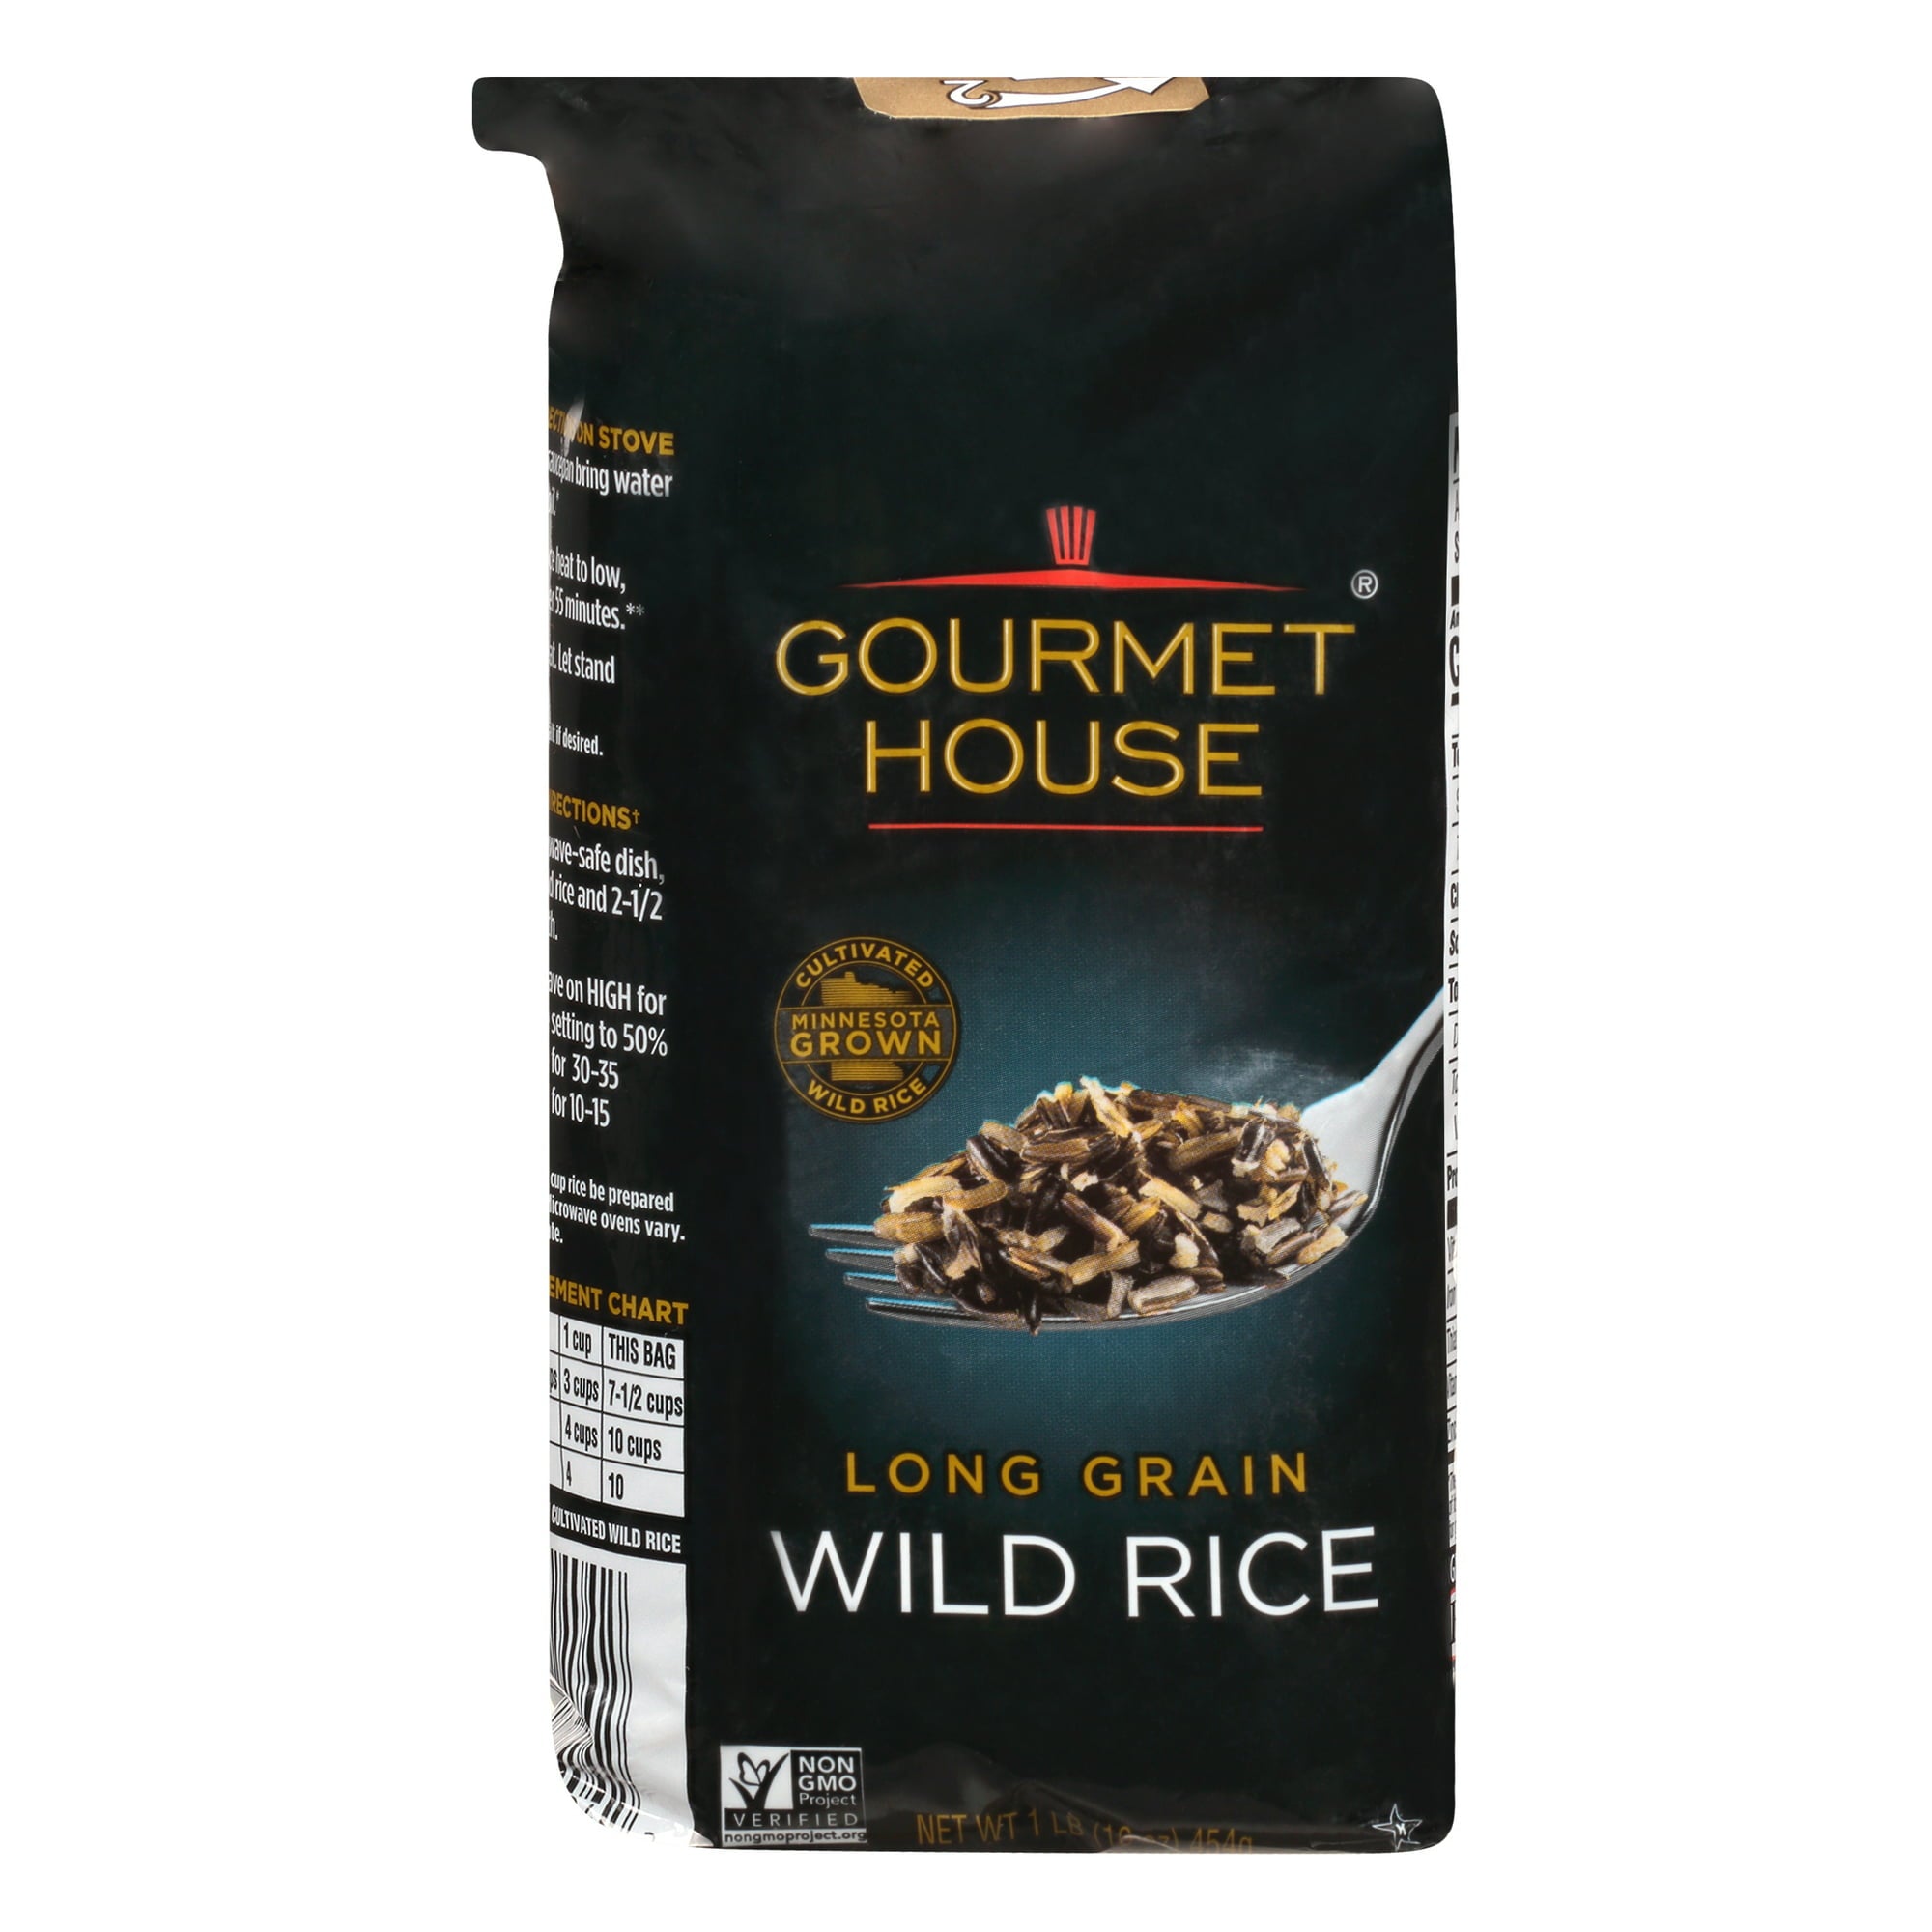 Gourmet House Cultivated Wild Rice, Long Grain Rice, 1 lb Bag